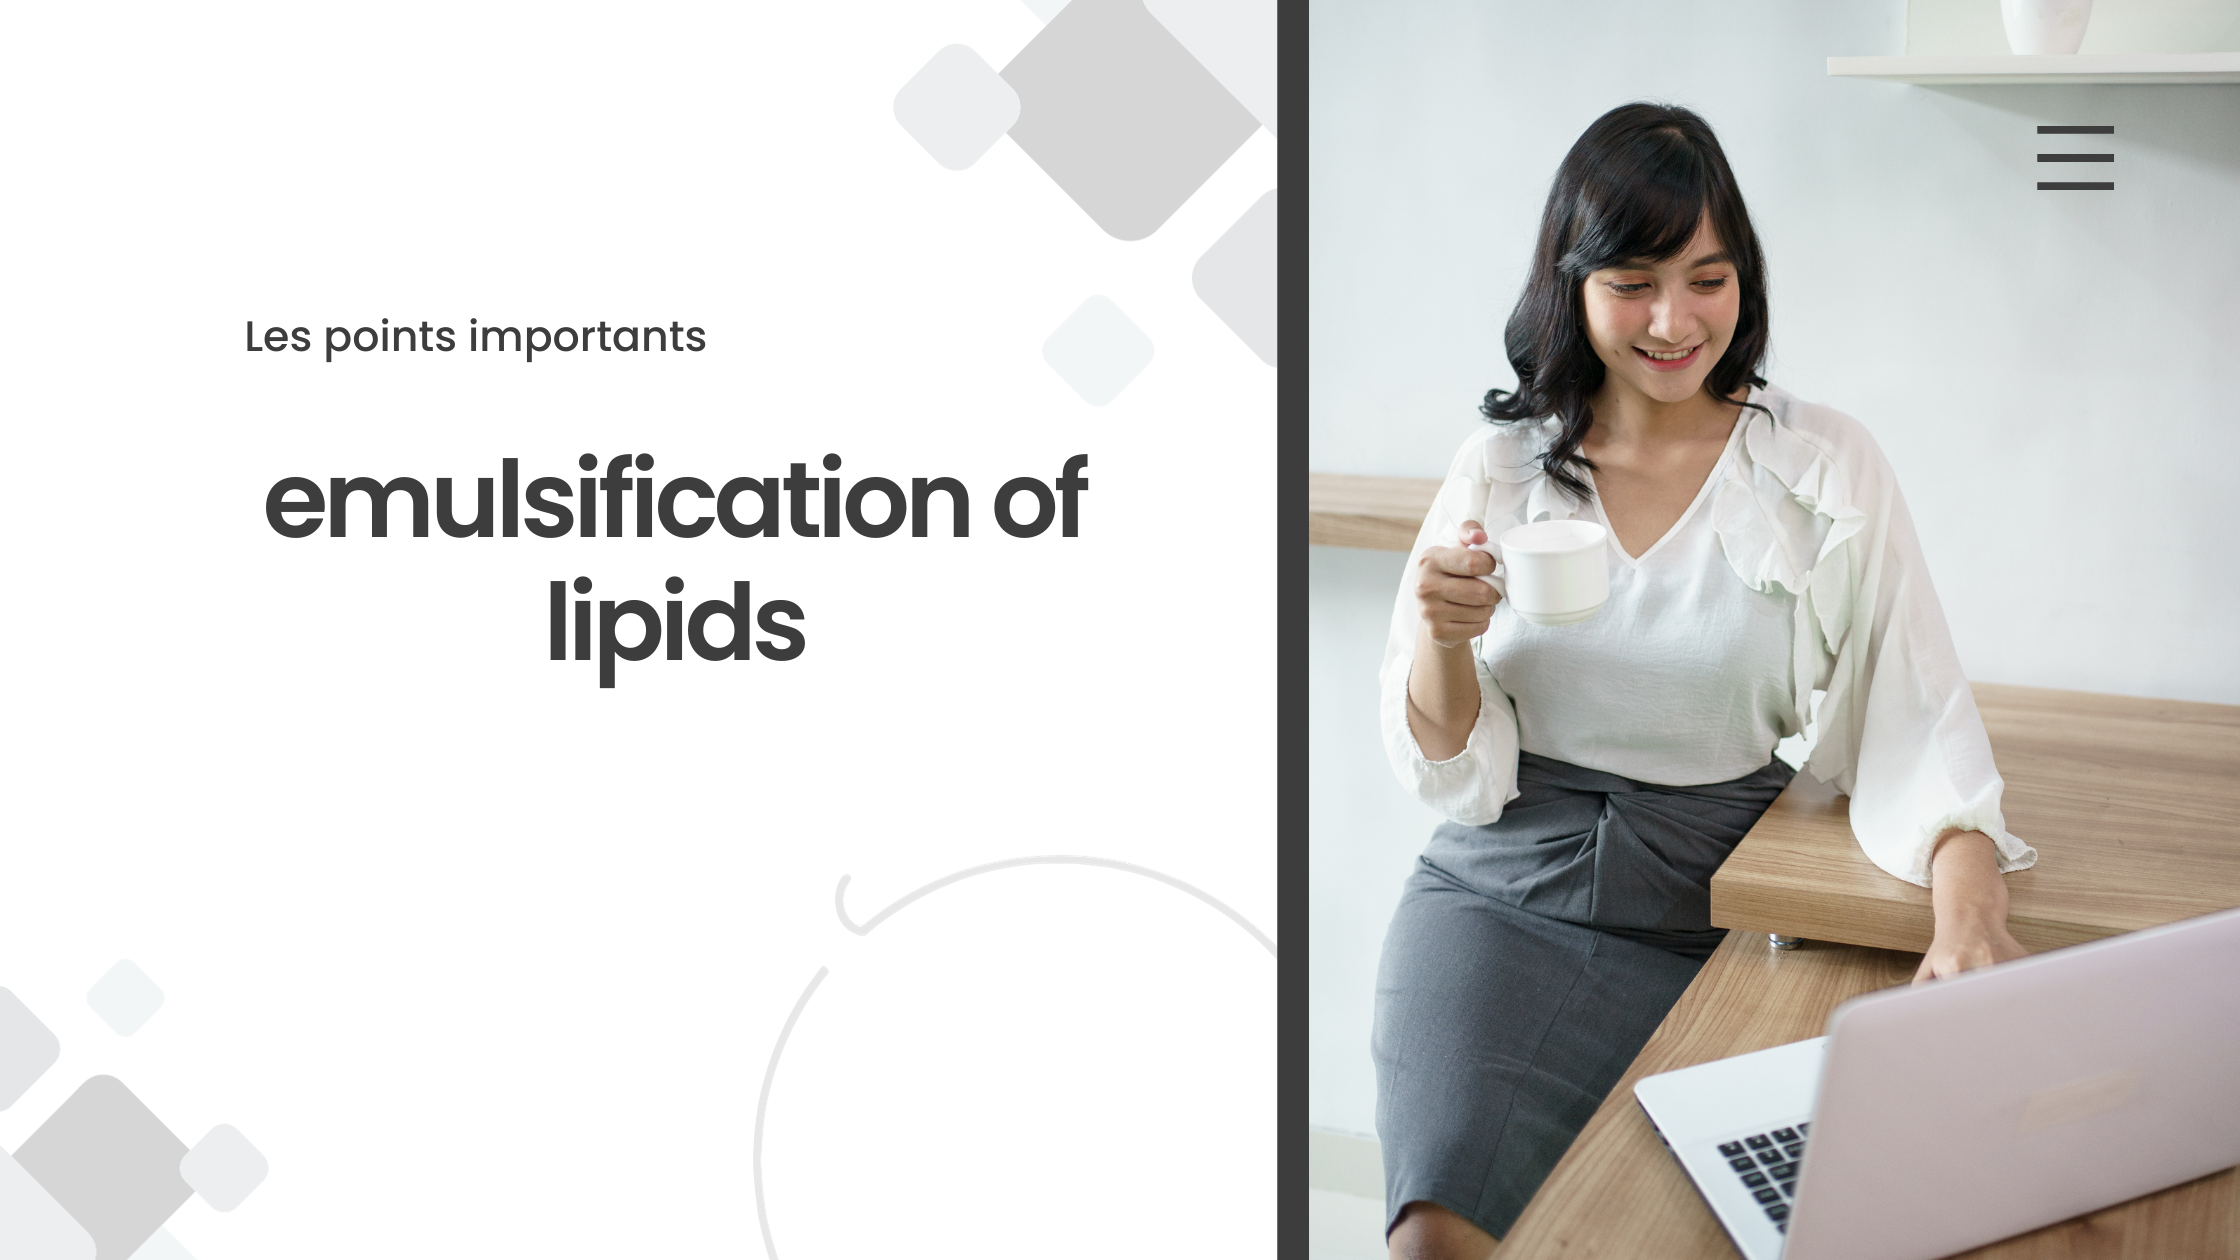 emulsification of lipids | Les points importants